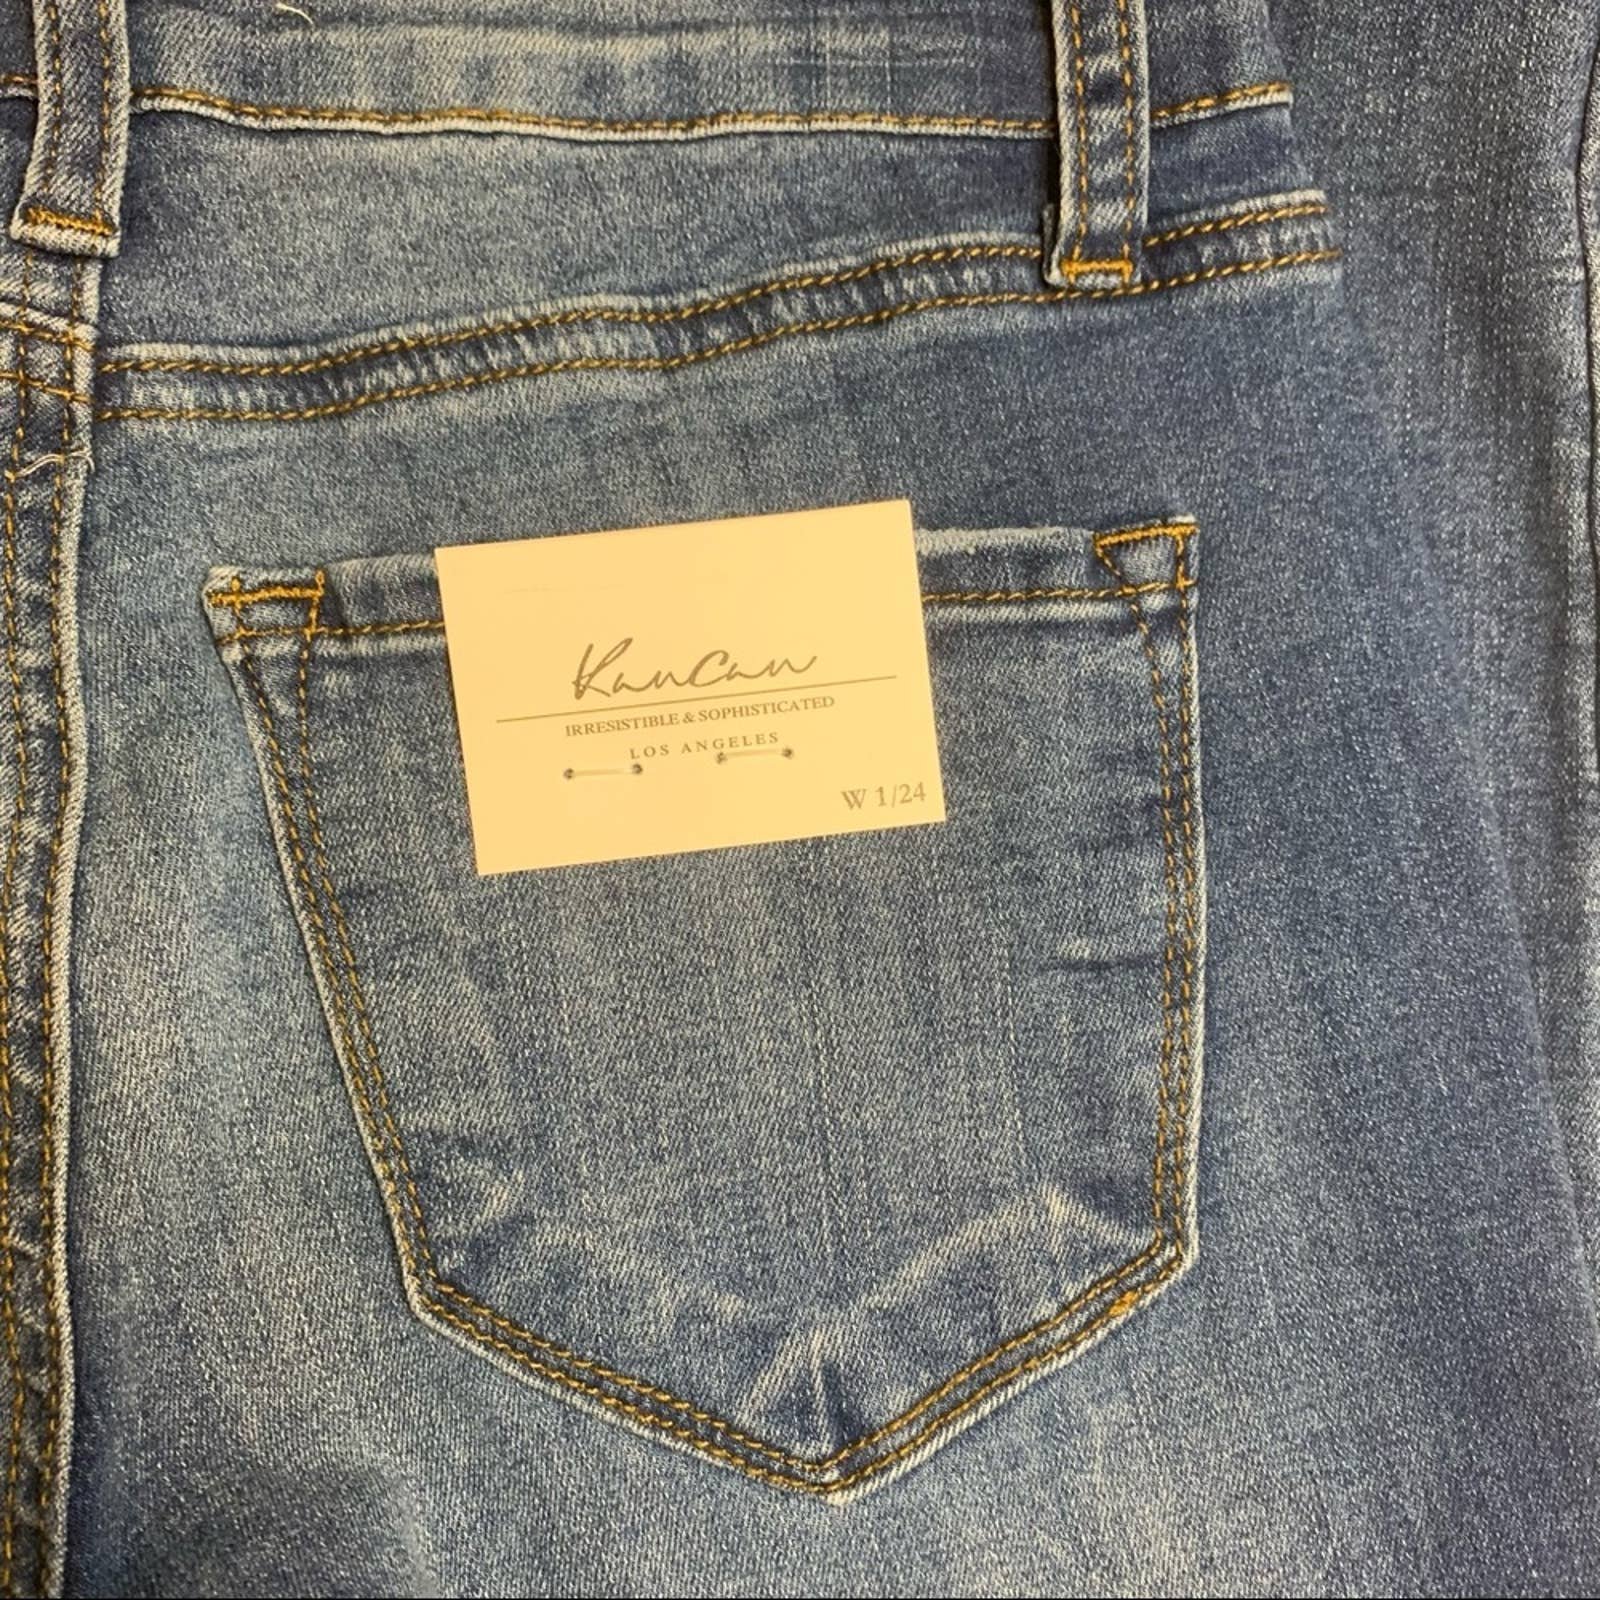 Elegant NWT KanCan Dark Wash Skinny Jeans JrIRJiMst Counter Genuine 